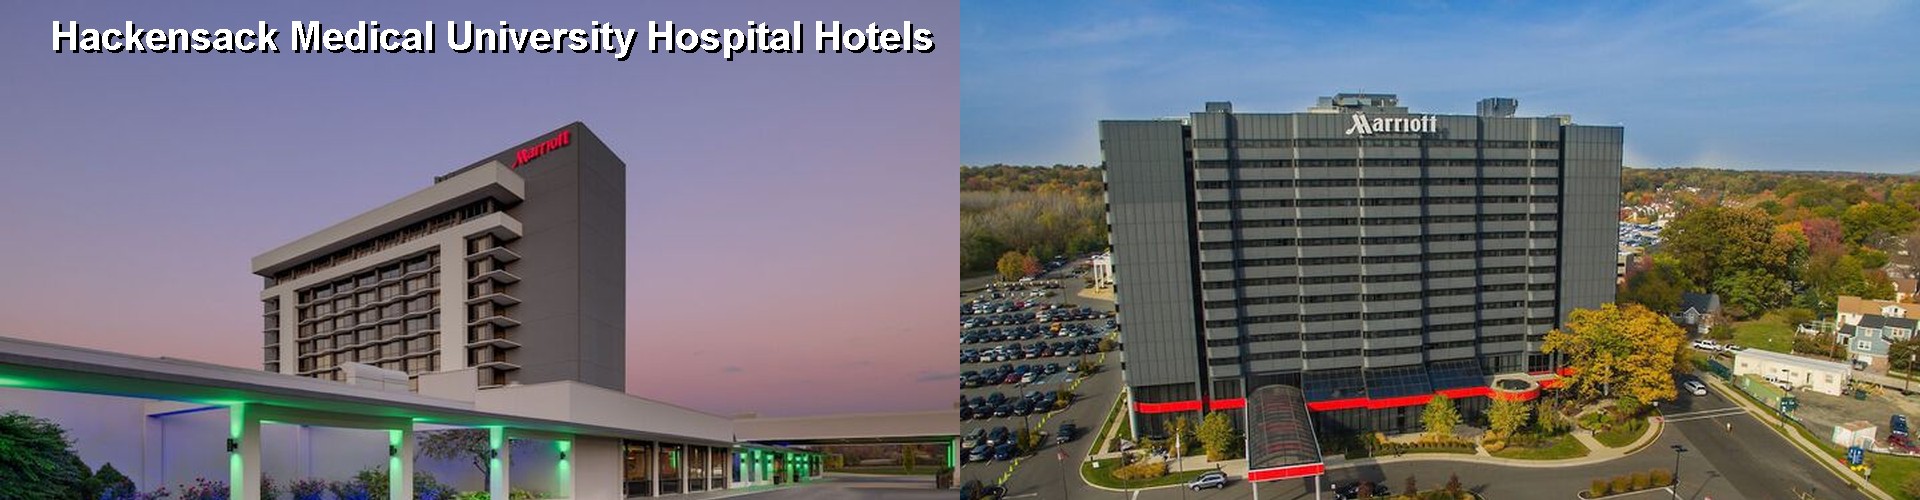 4 Best Hotels near Hackensack Medical University Hospital